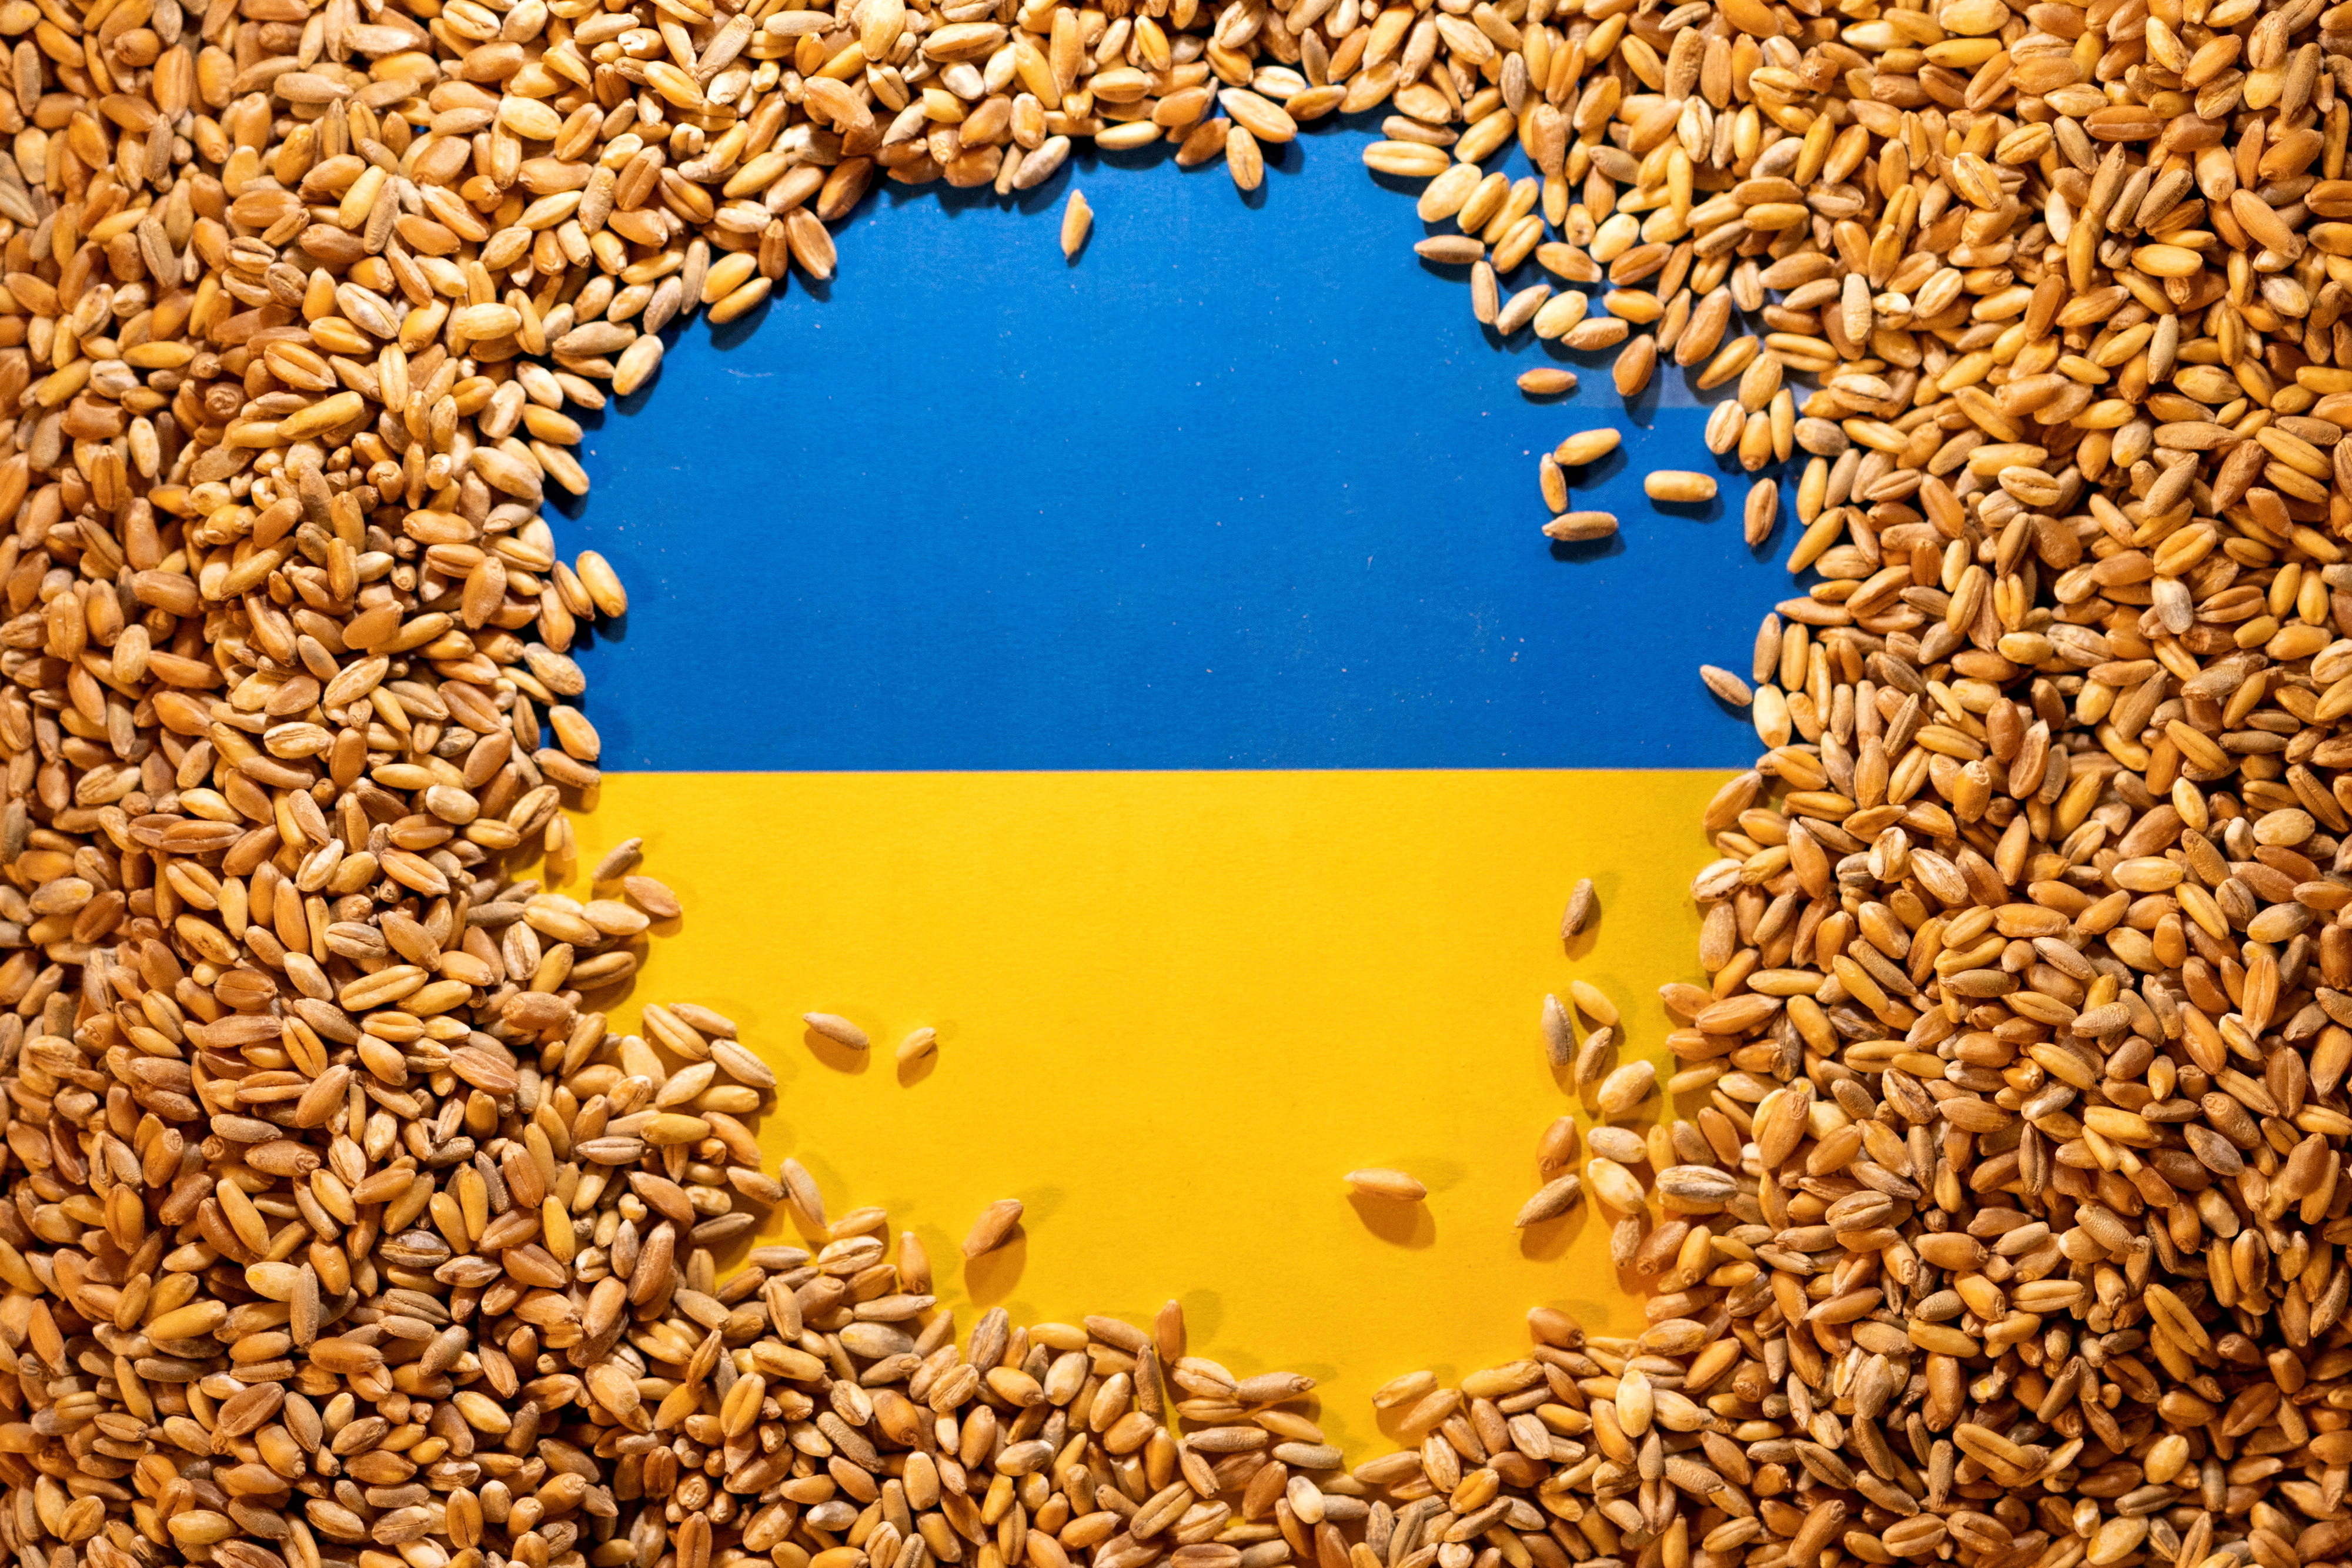 Ship insurance facility set up for Ukraine grain exports, says broker Miller